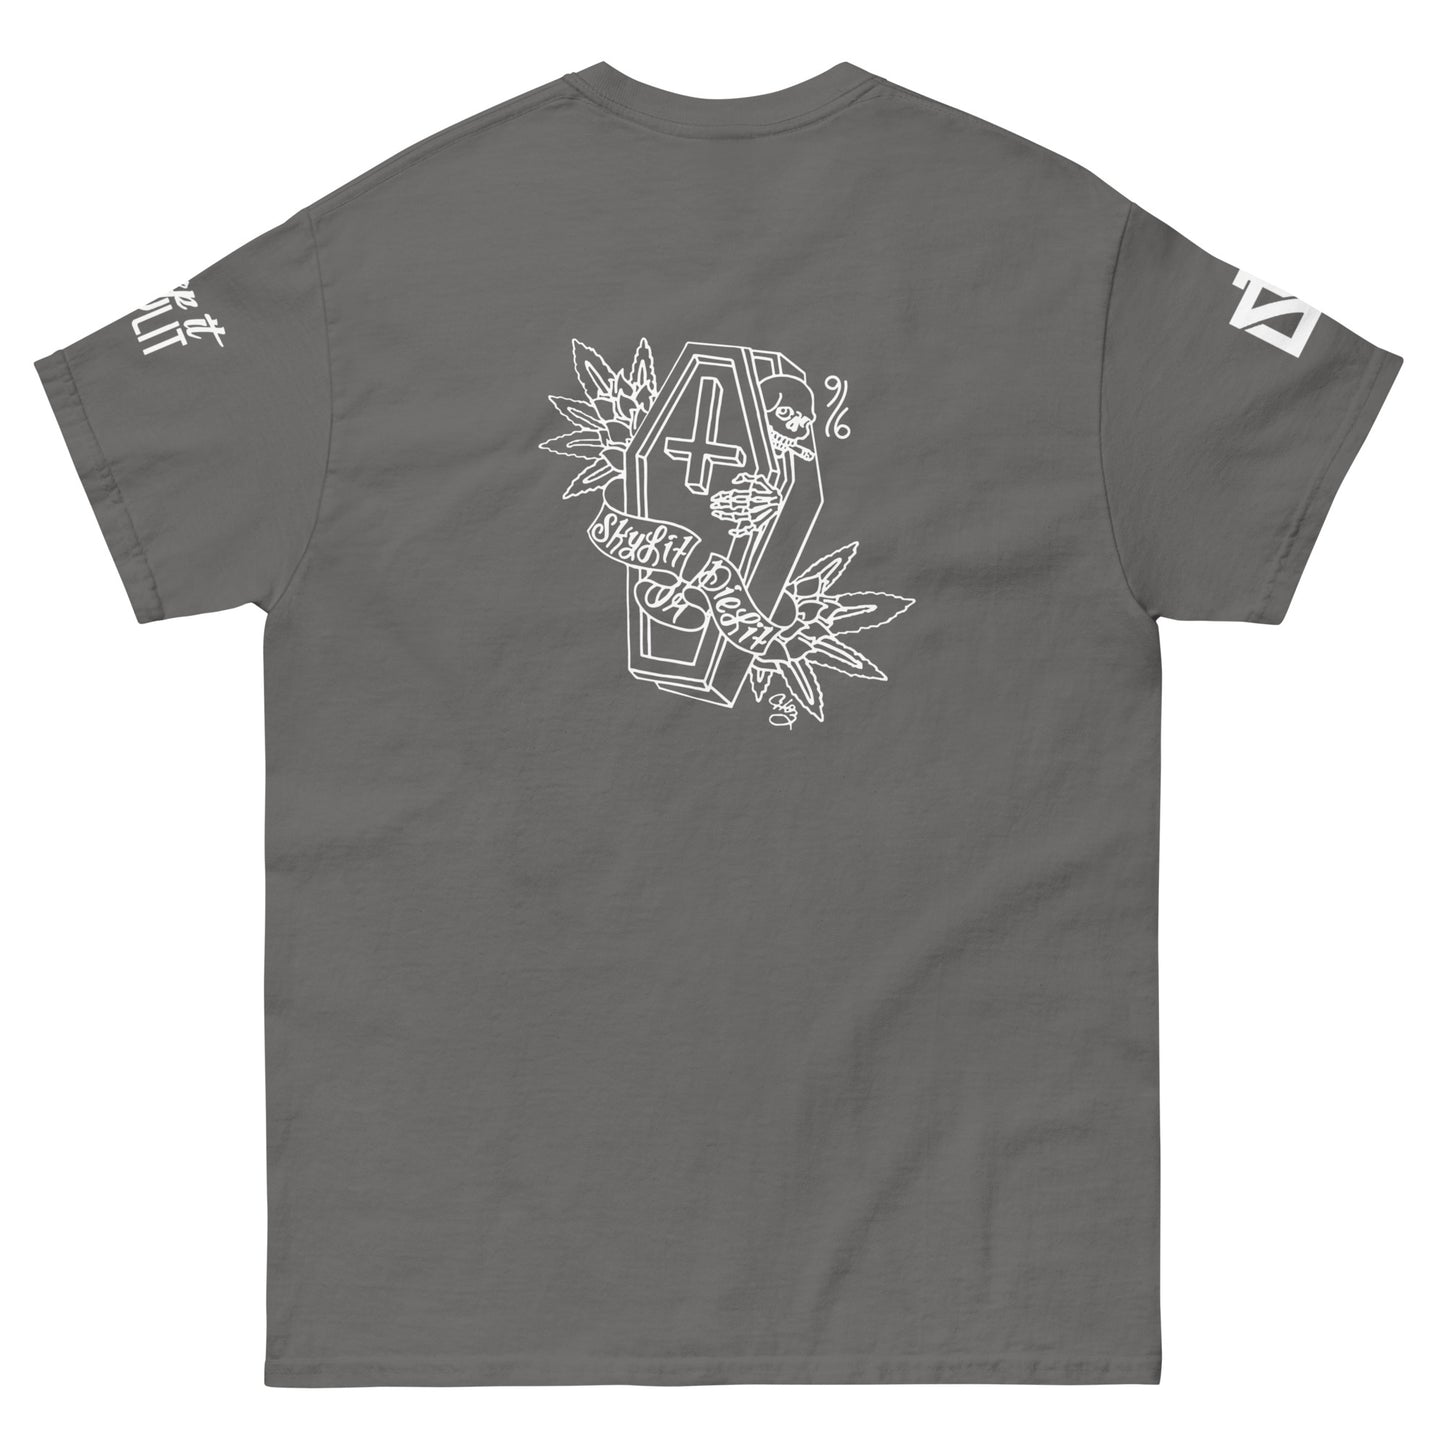 Skylit Or Dielit T-Shirt